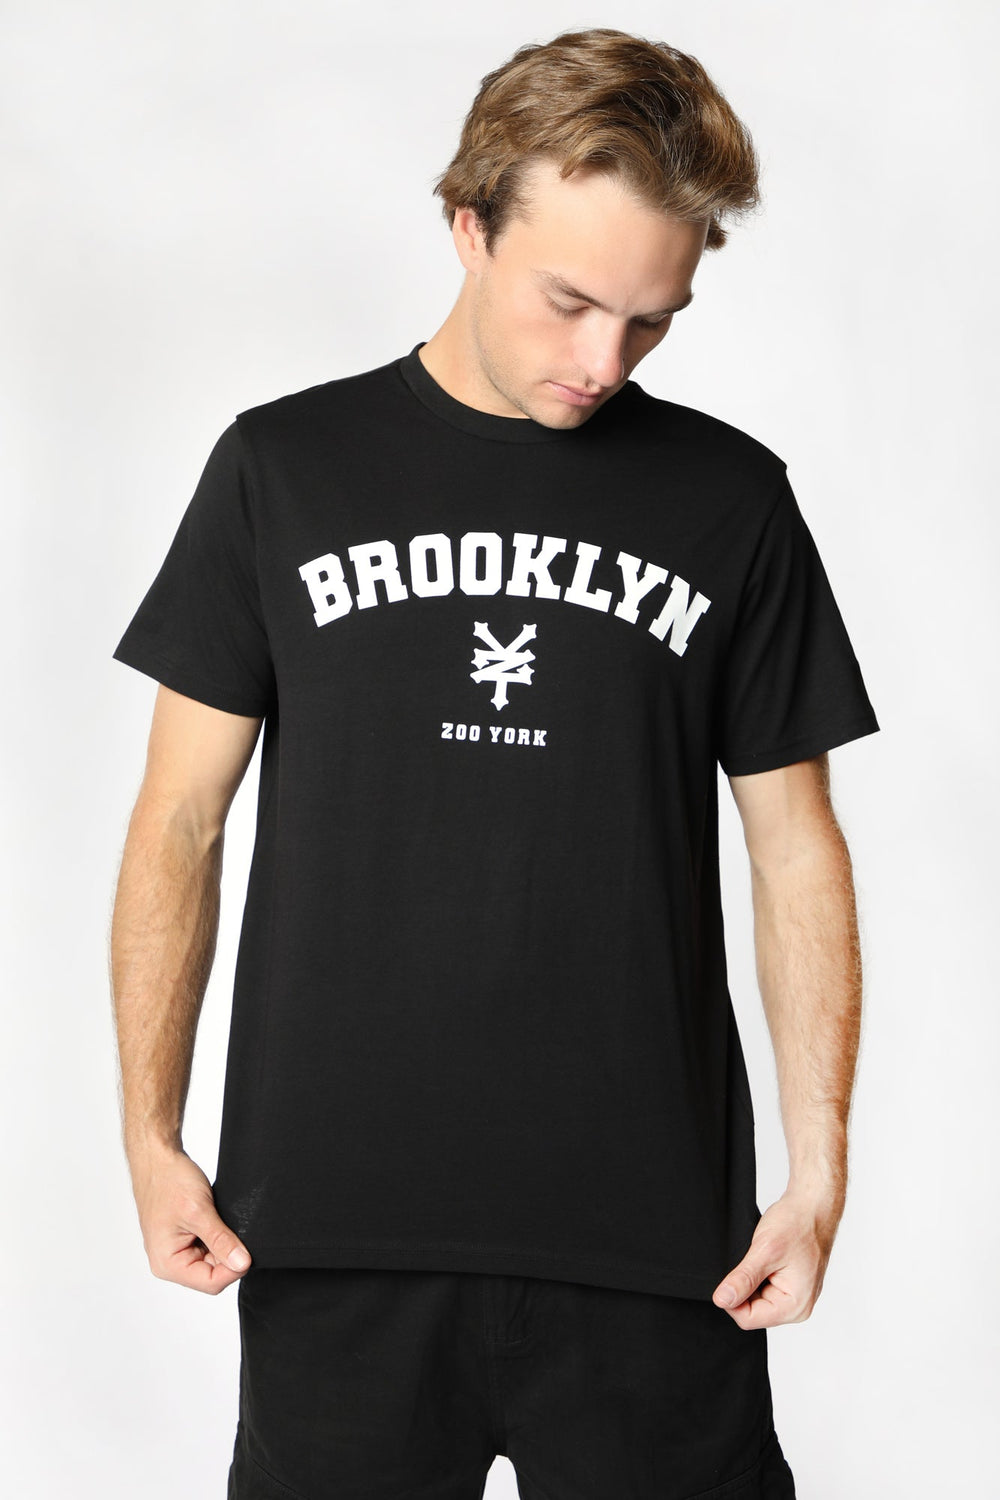 T-Shirt Imprimé Logo Brooklyn Zoo York Homme Noir